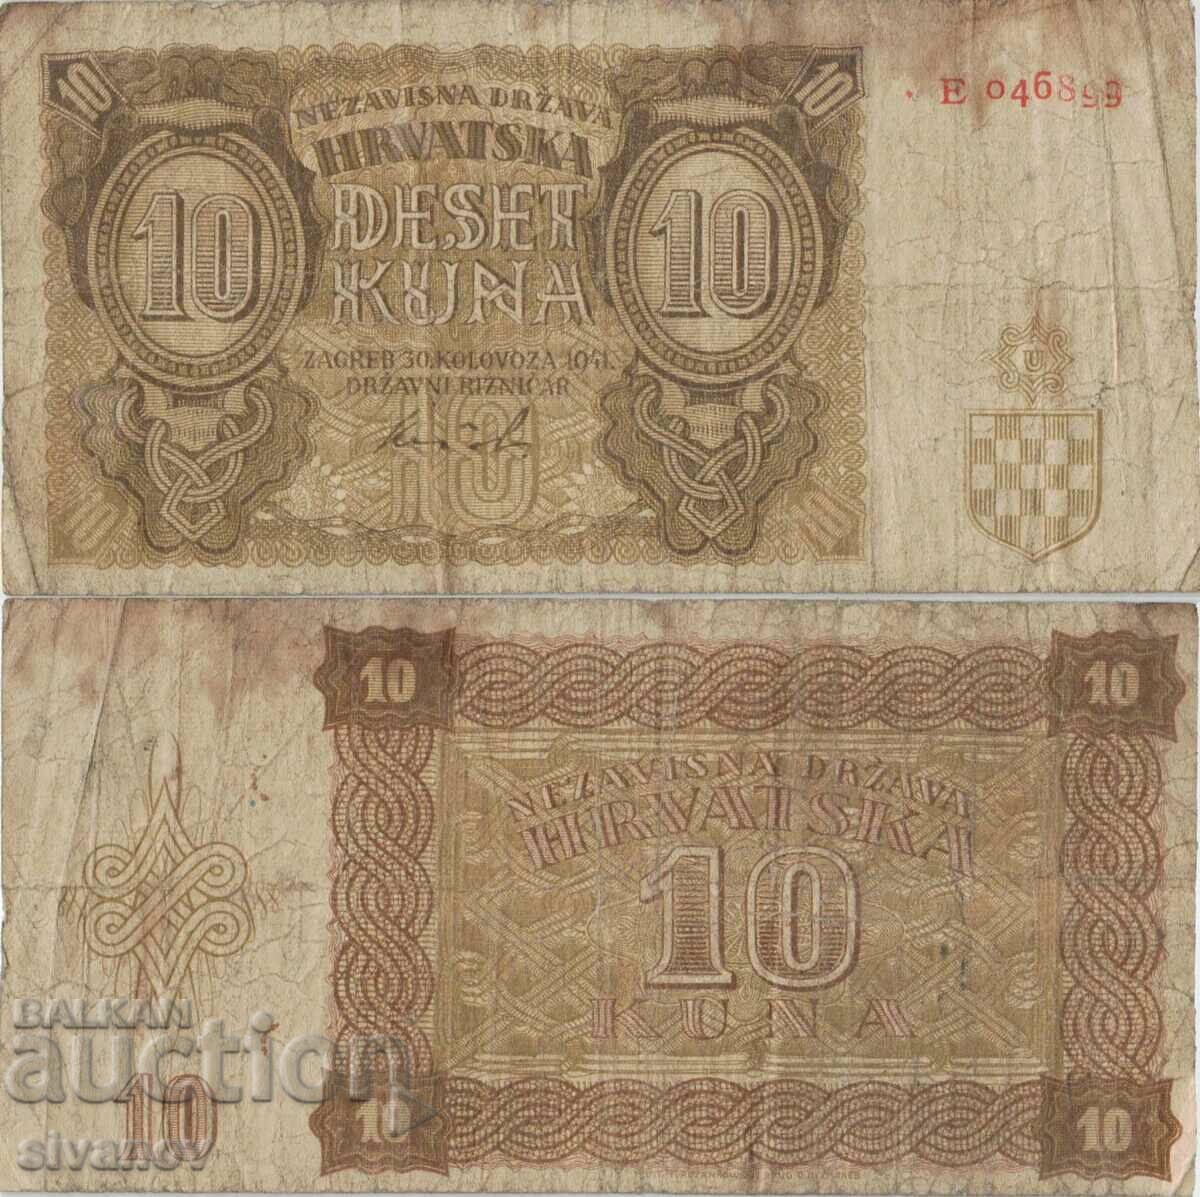 Croația 10 kuna 1941 bancnota #5323